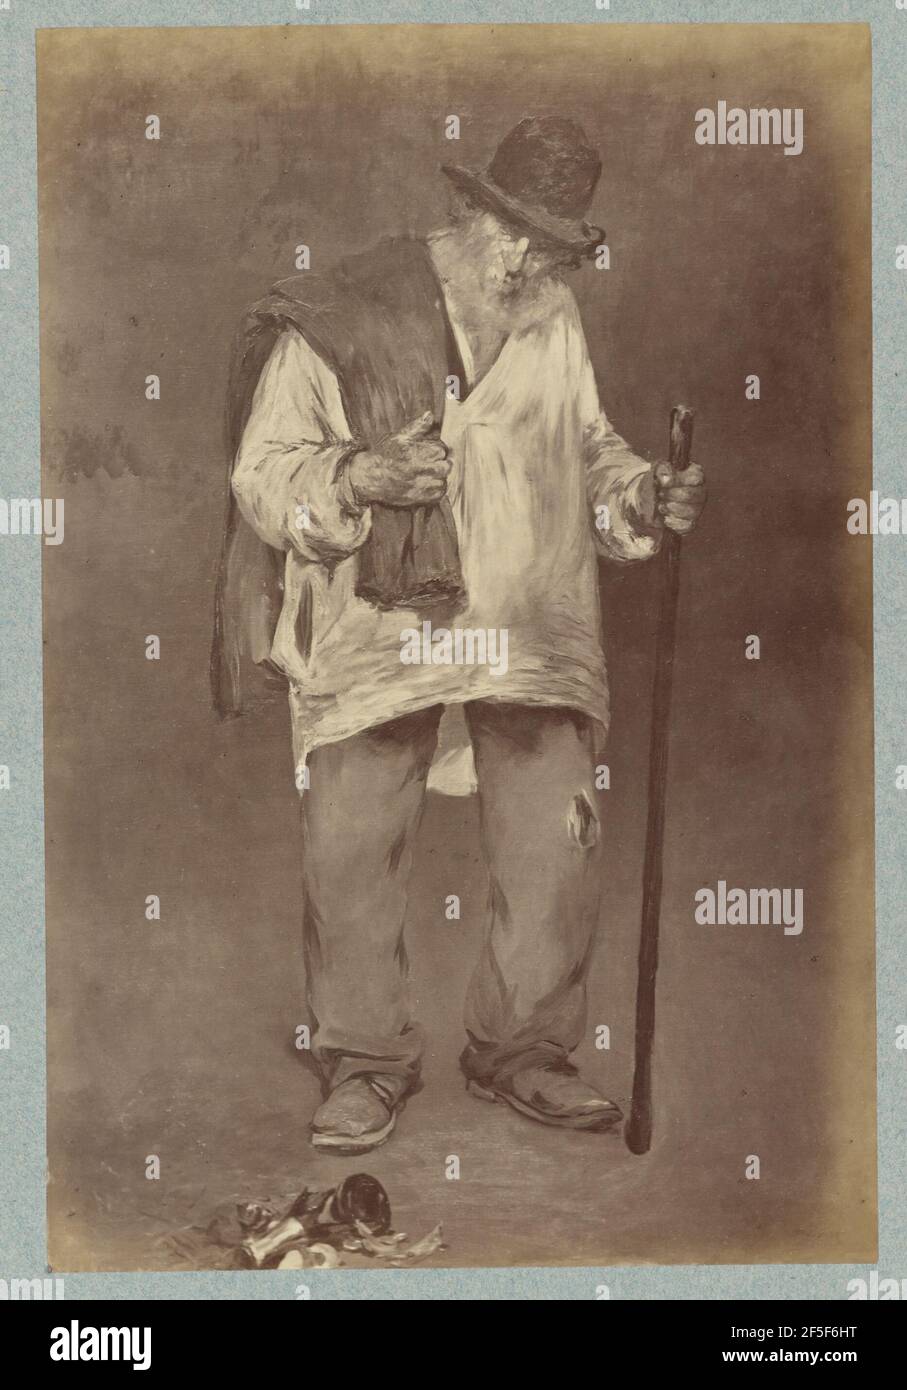 'The Ragpicker' by Manet. Anatole Godet (French, 1839 - 1887) Stock Photo